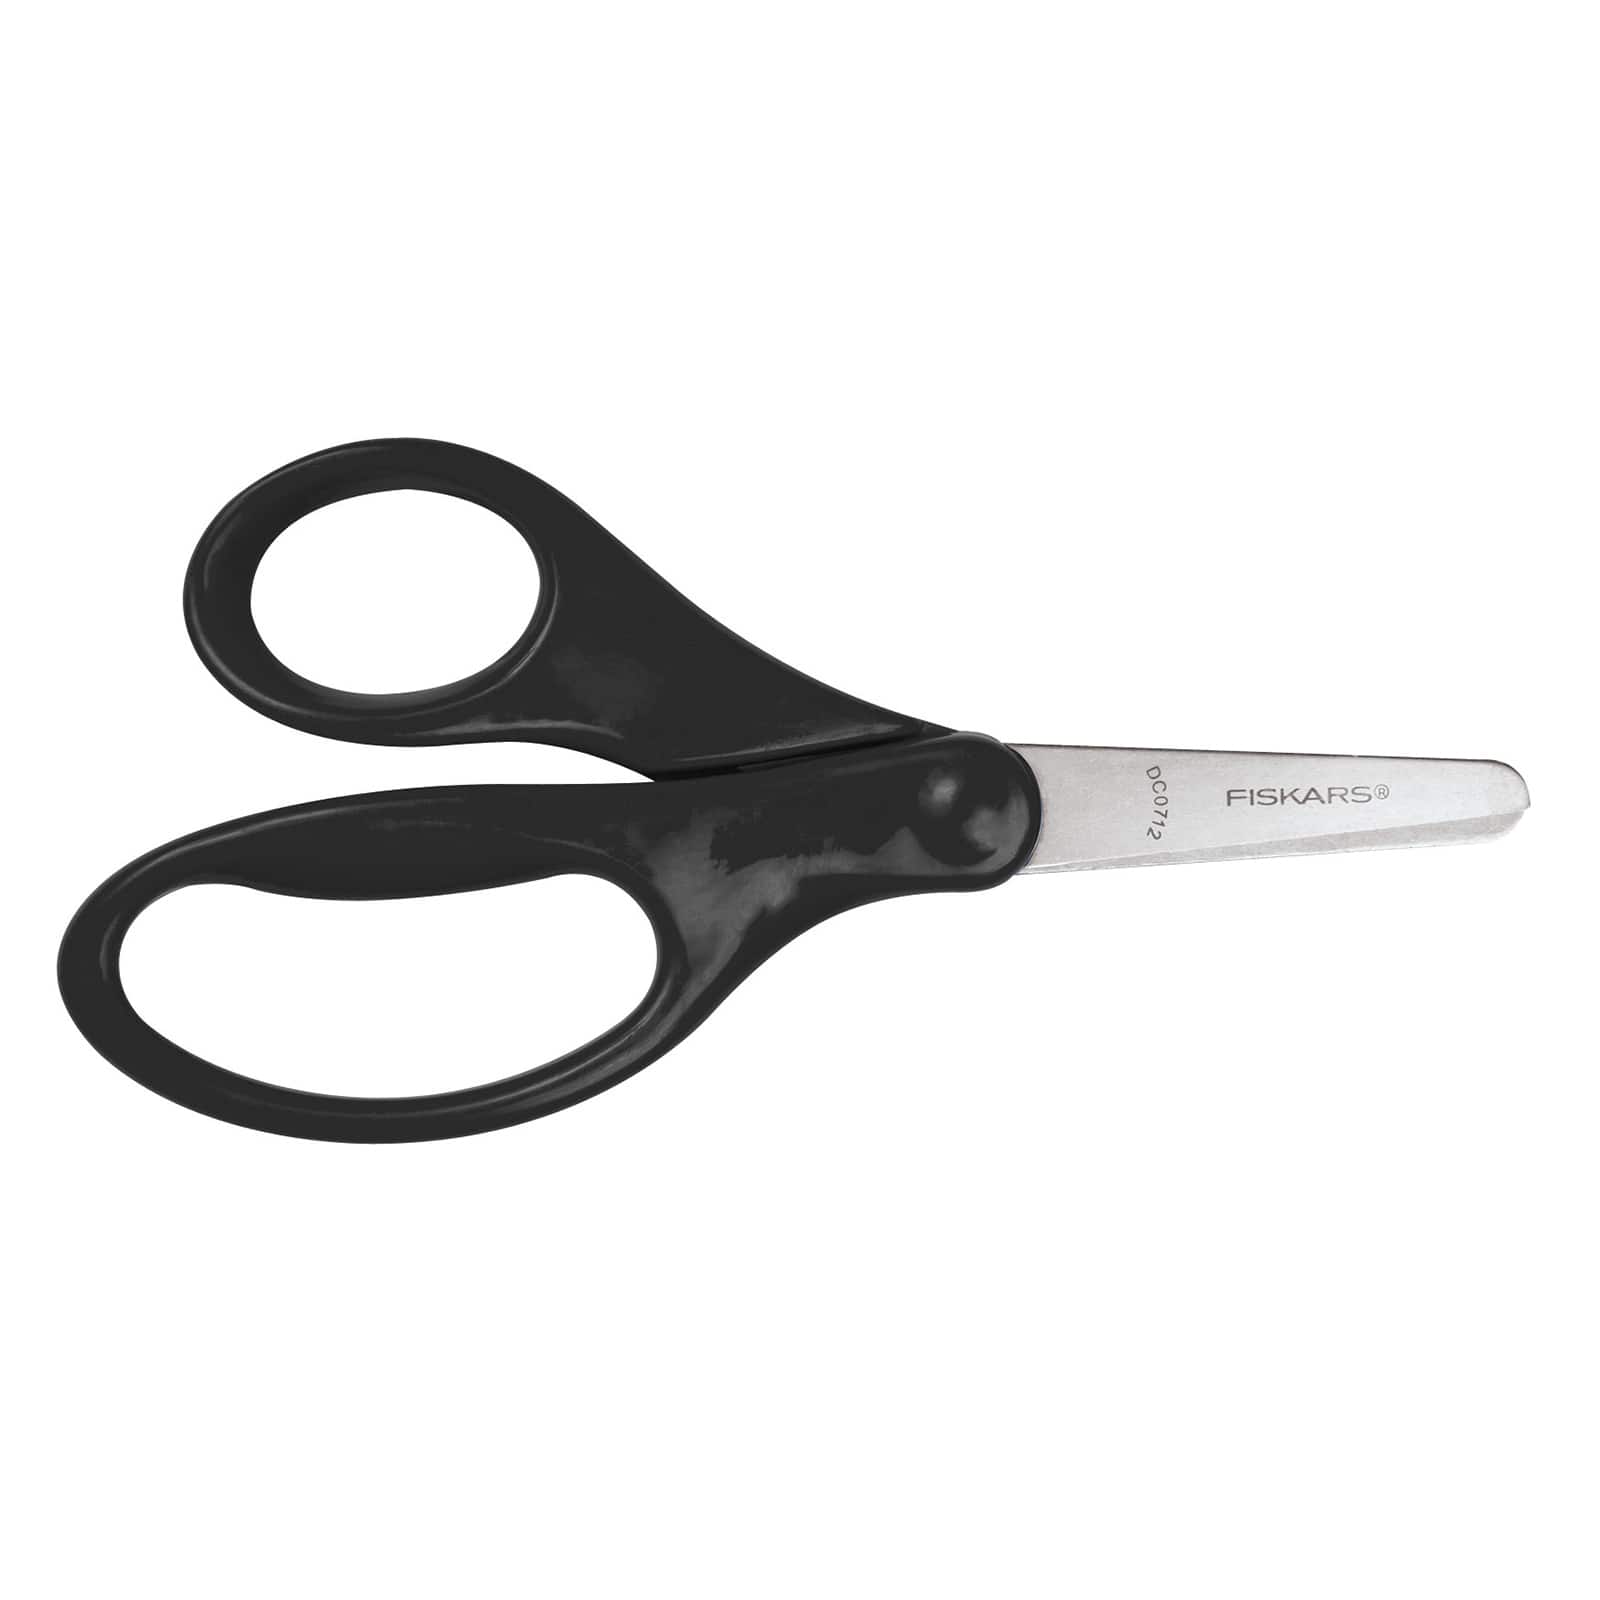 Fiskars Blunt-Tip Child Scissors